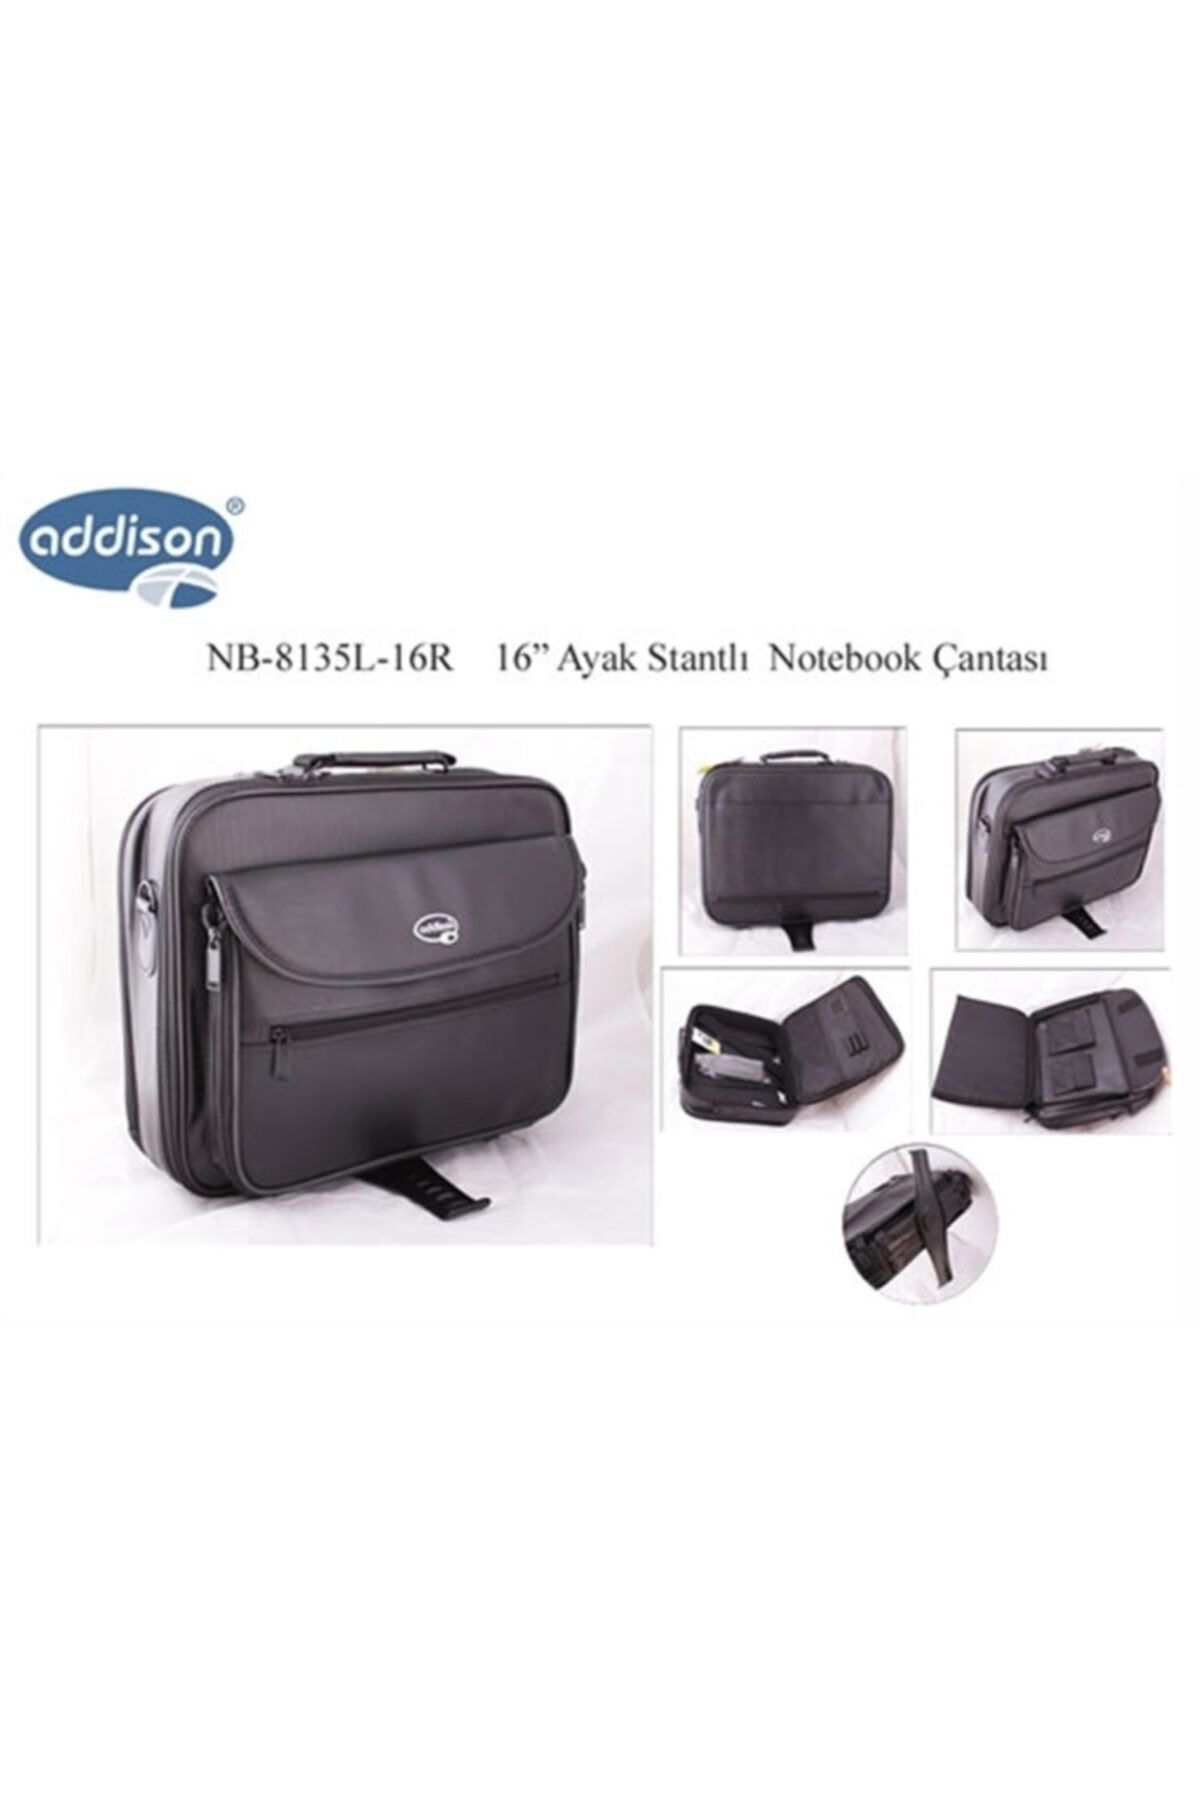 Addison Nb-8135l-16r Ayaklı Standlı Notebook Çantası